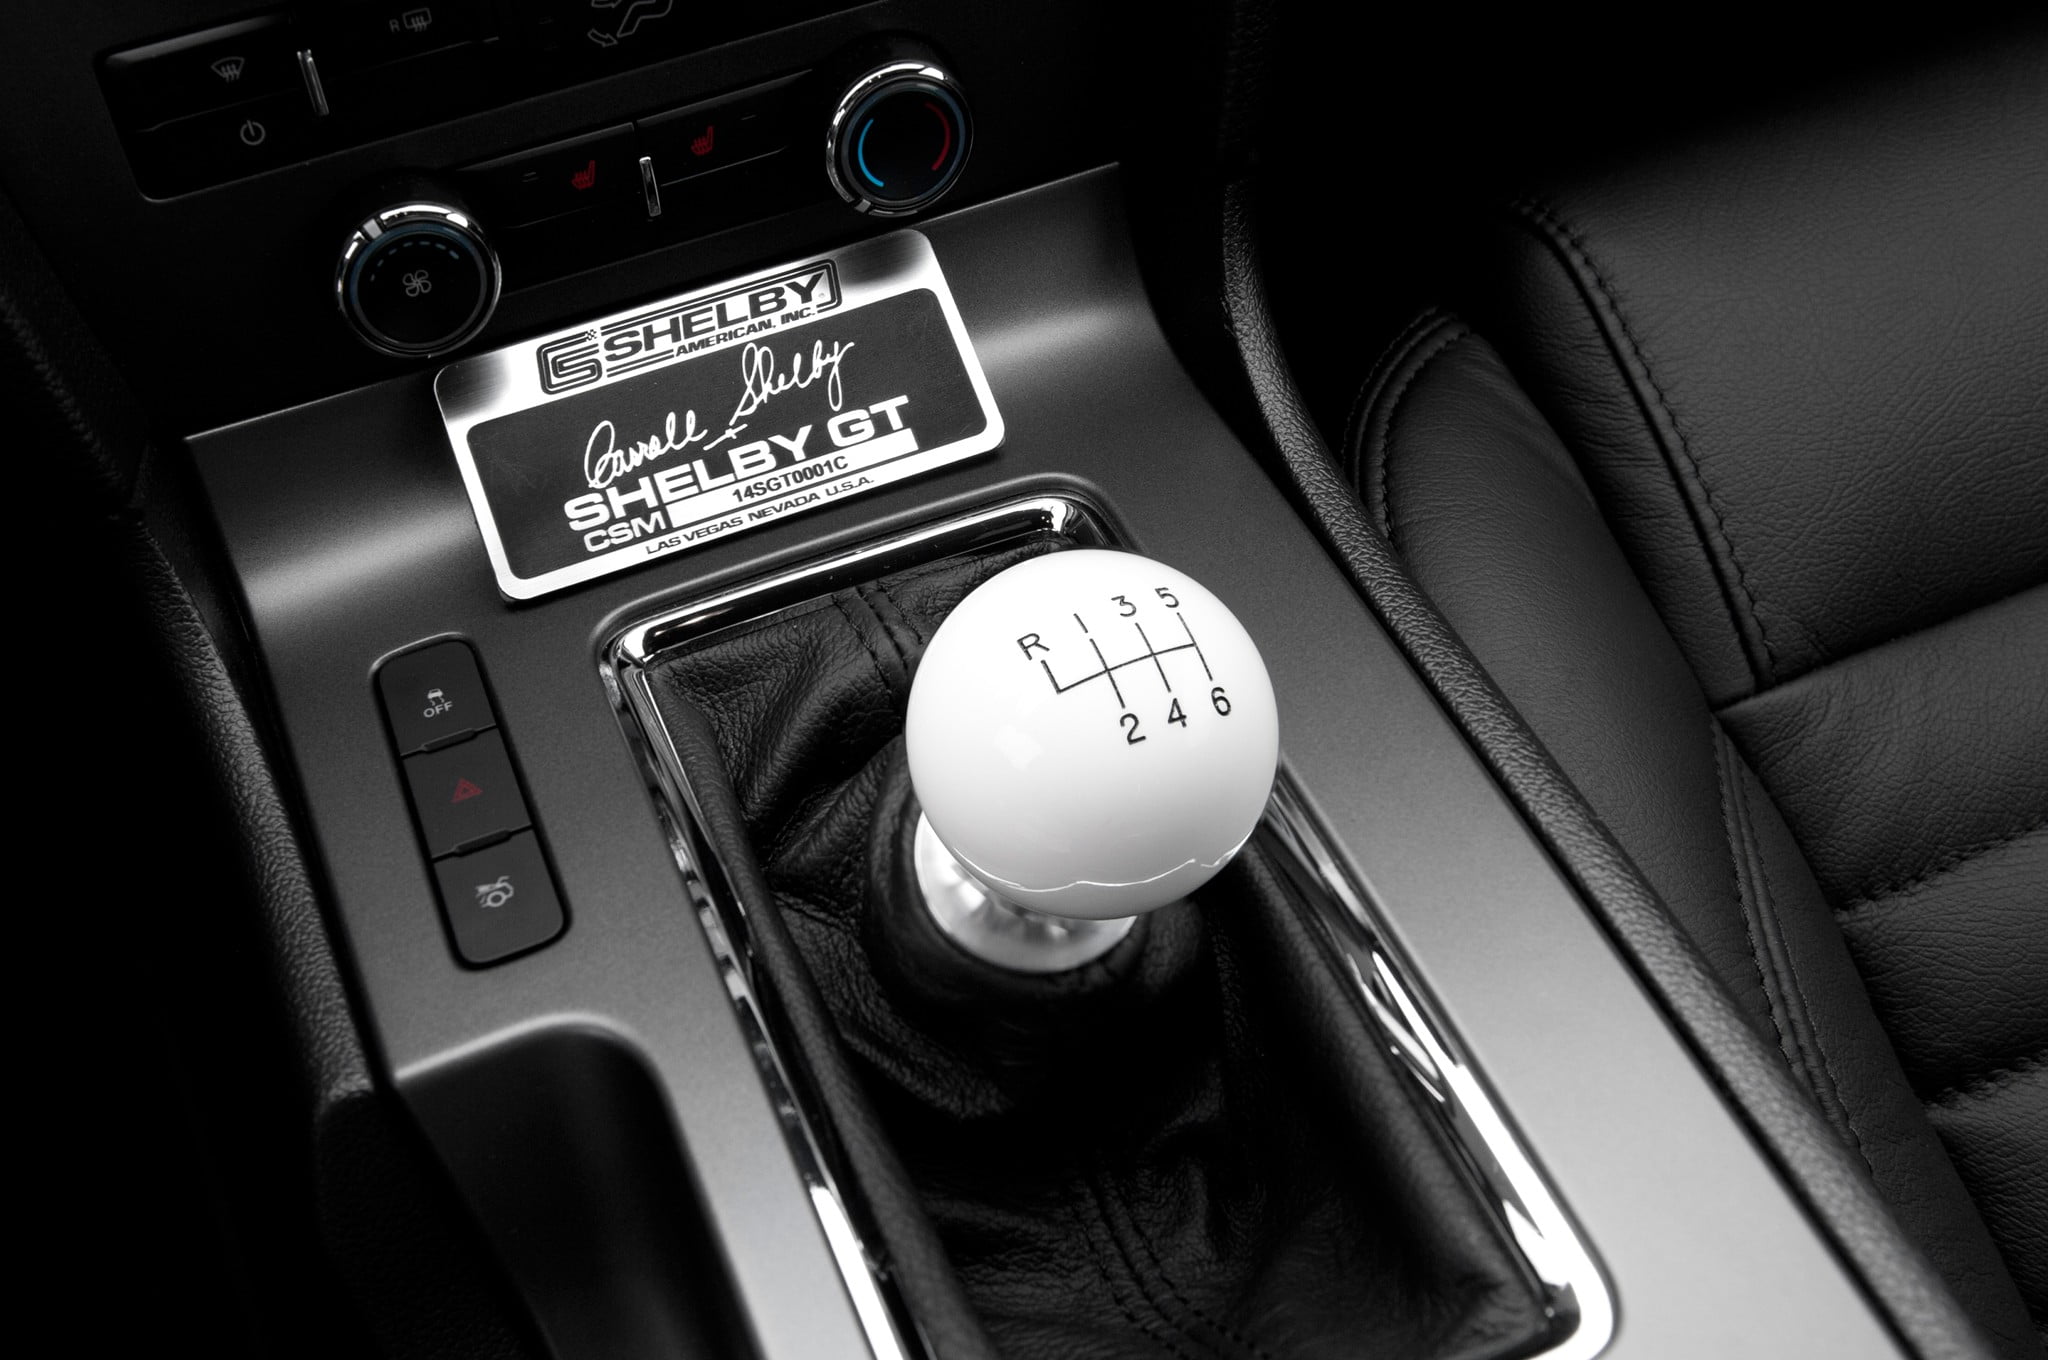 black and white gear shift lever, white ball gear shift lever